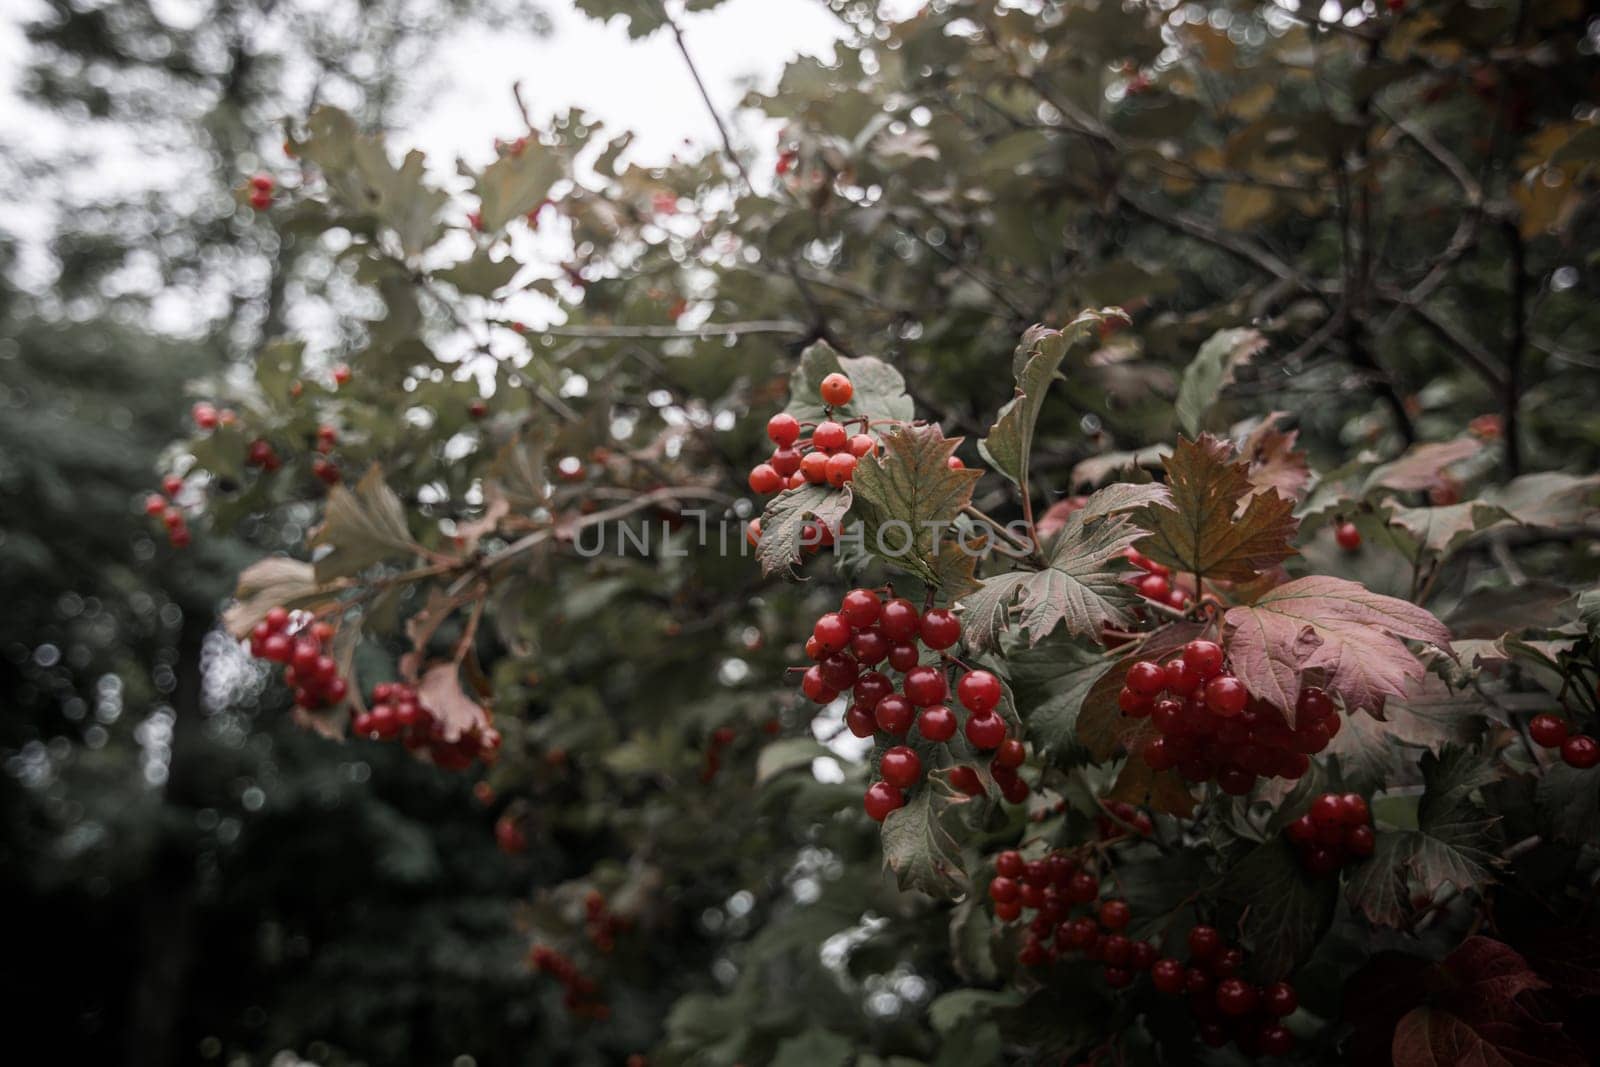 Viburnum bush with red berries. Toned photo in warm dark tones. Autumn. Harvest collection. Alternative medicine.